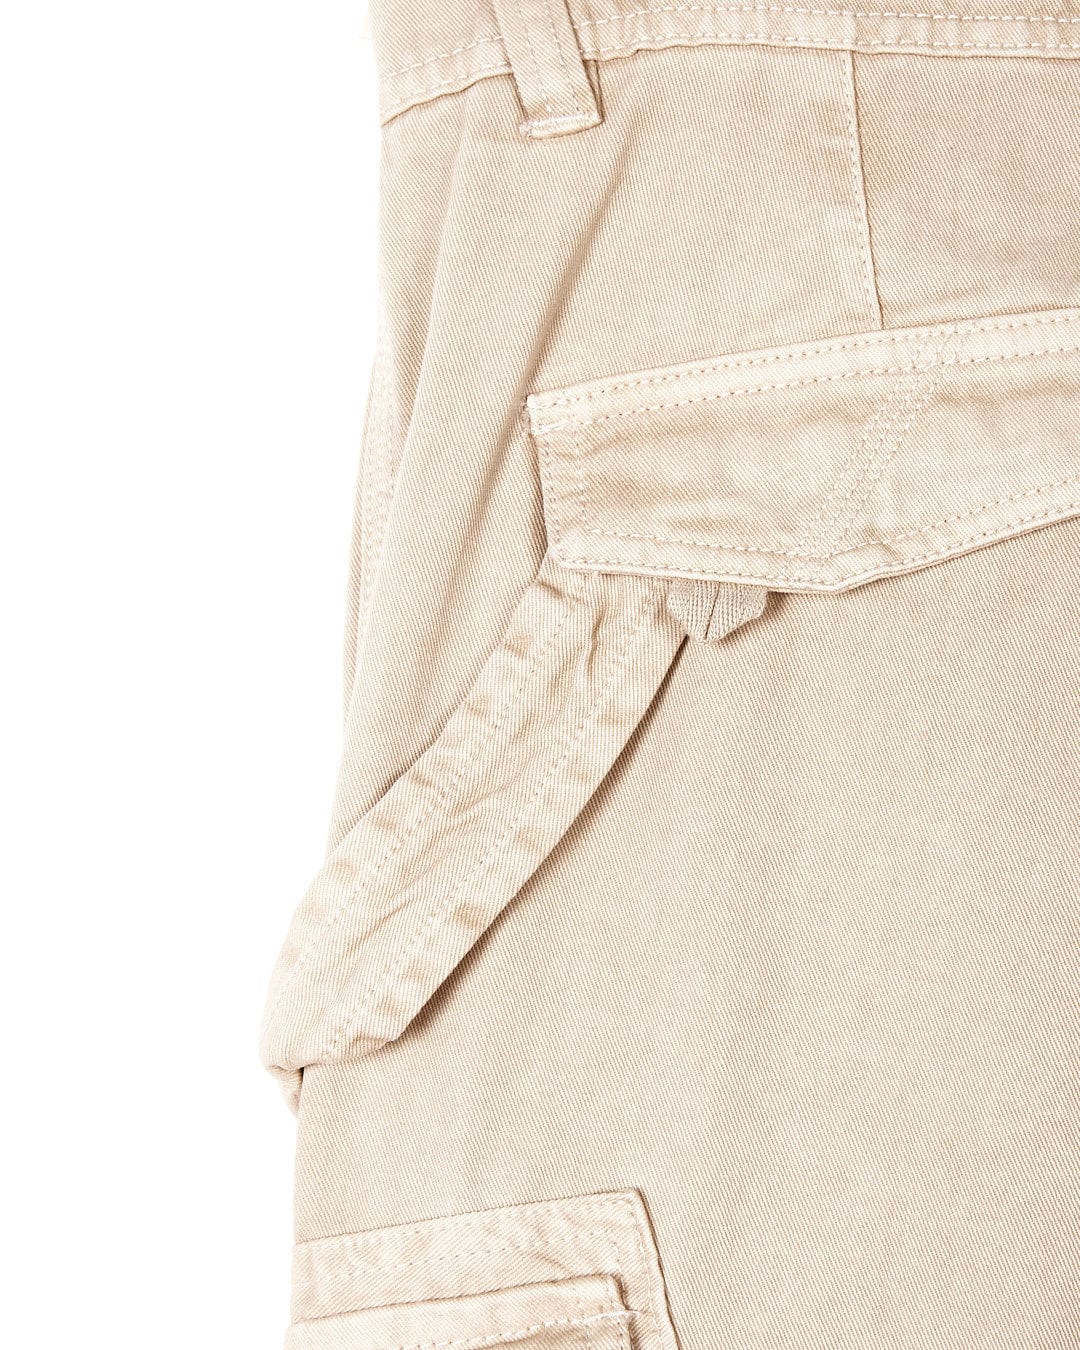 A close-up image of a cream Saltrock Godrevy Mens Cargo Trouser.